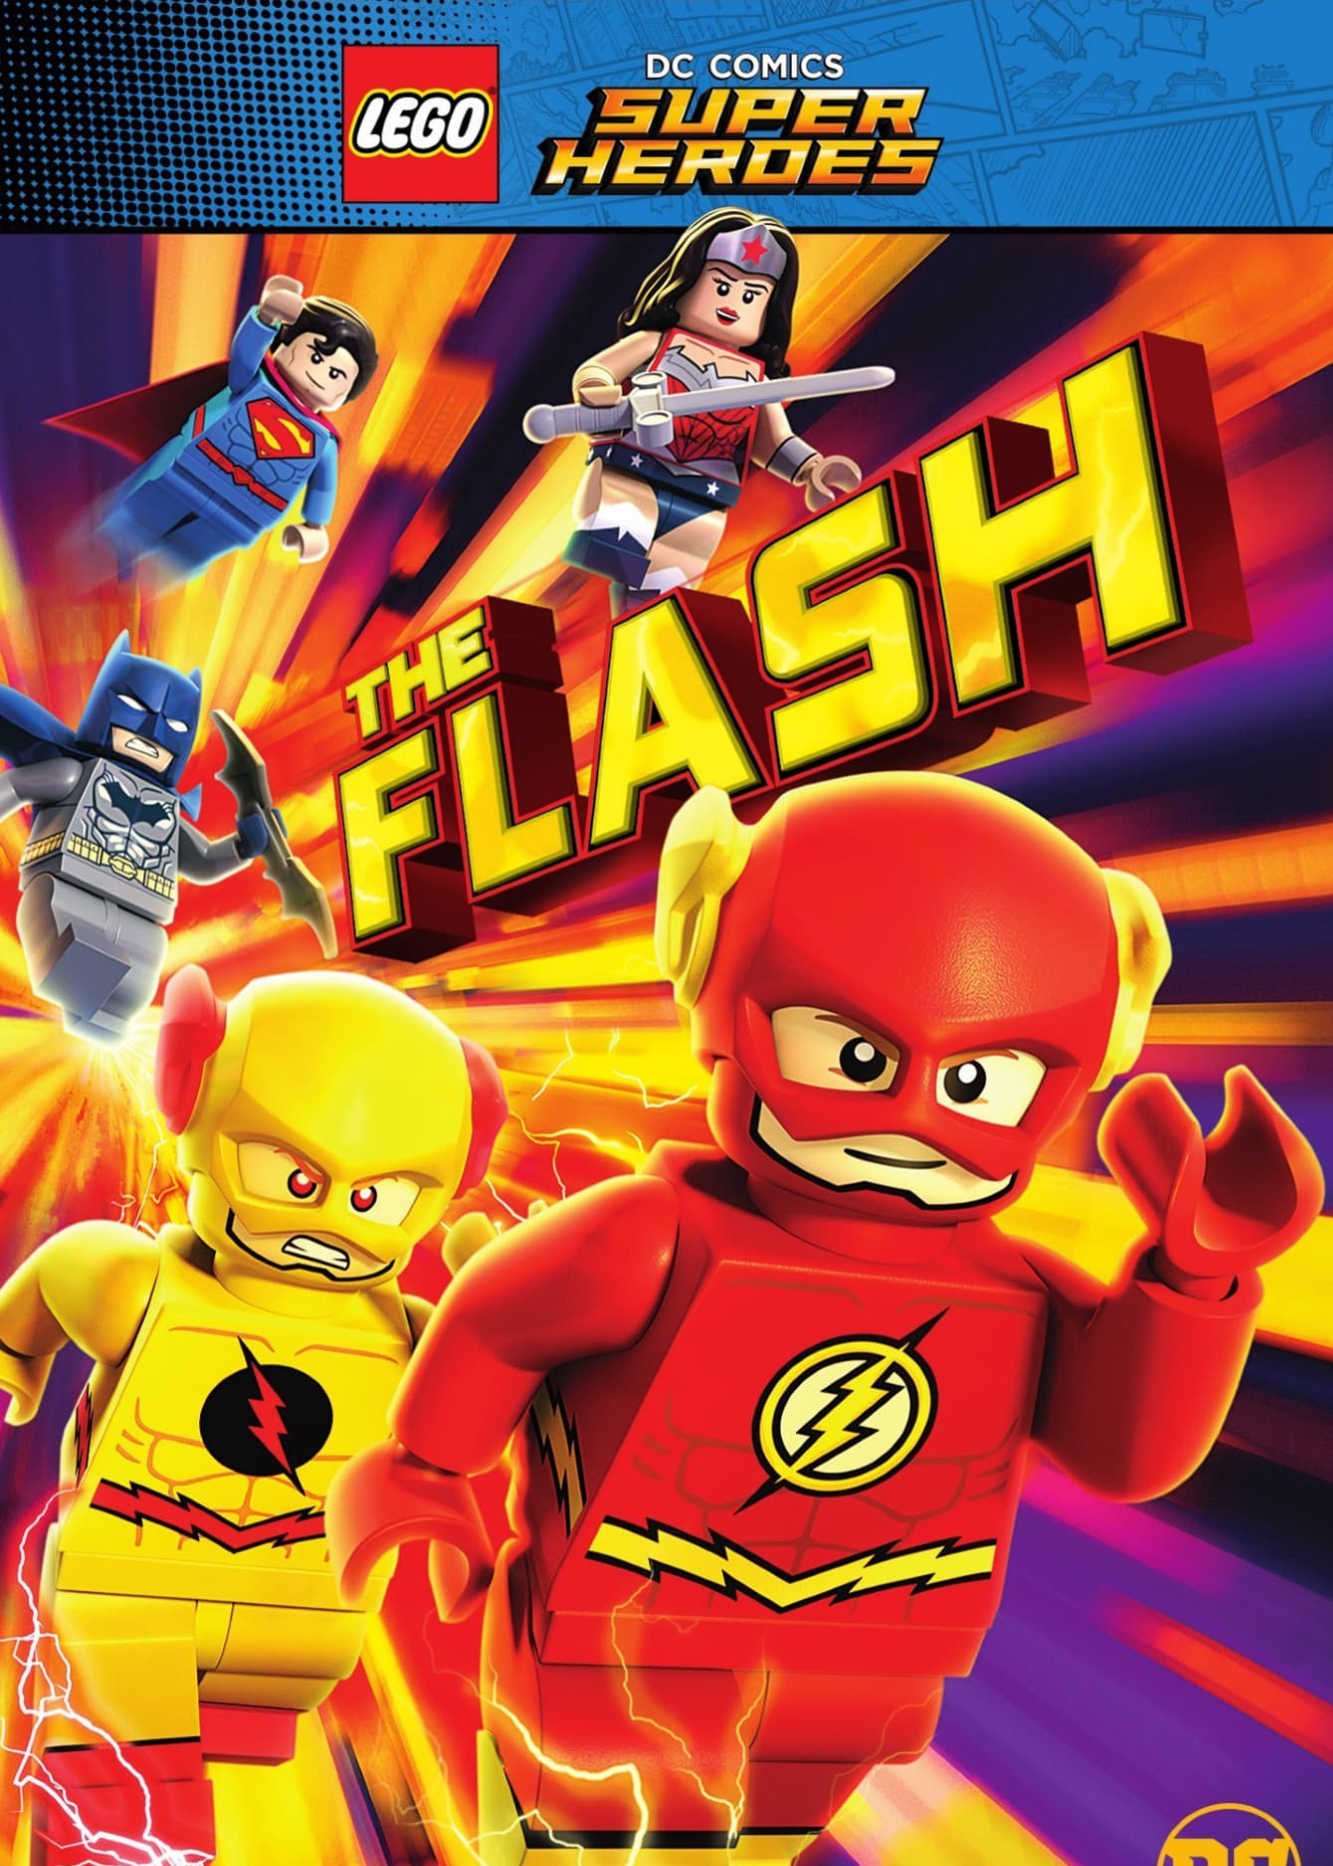 Lego DC Comics Super Heroes: Tia Chớp (Lego DC Comics Super Heroes: The Flash) [2018]